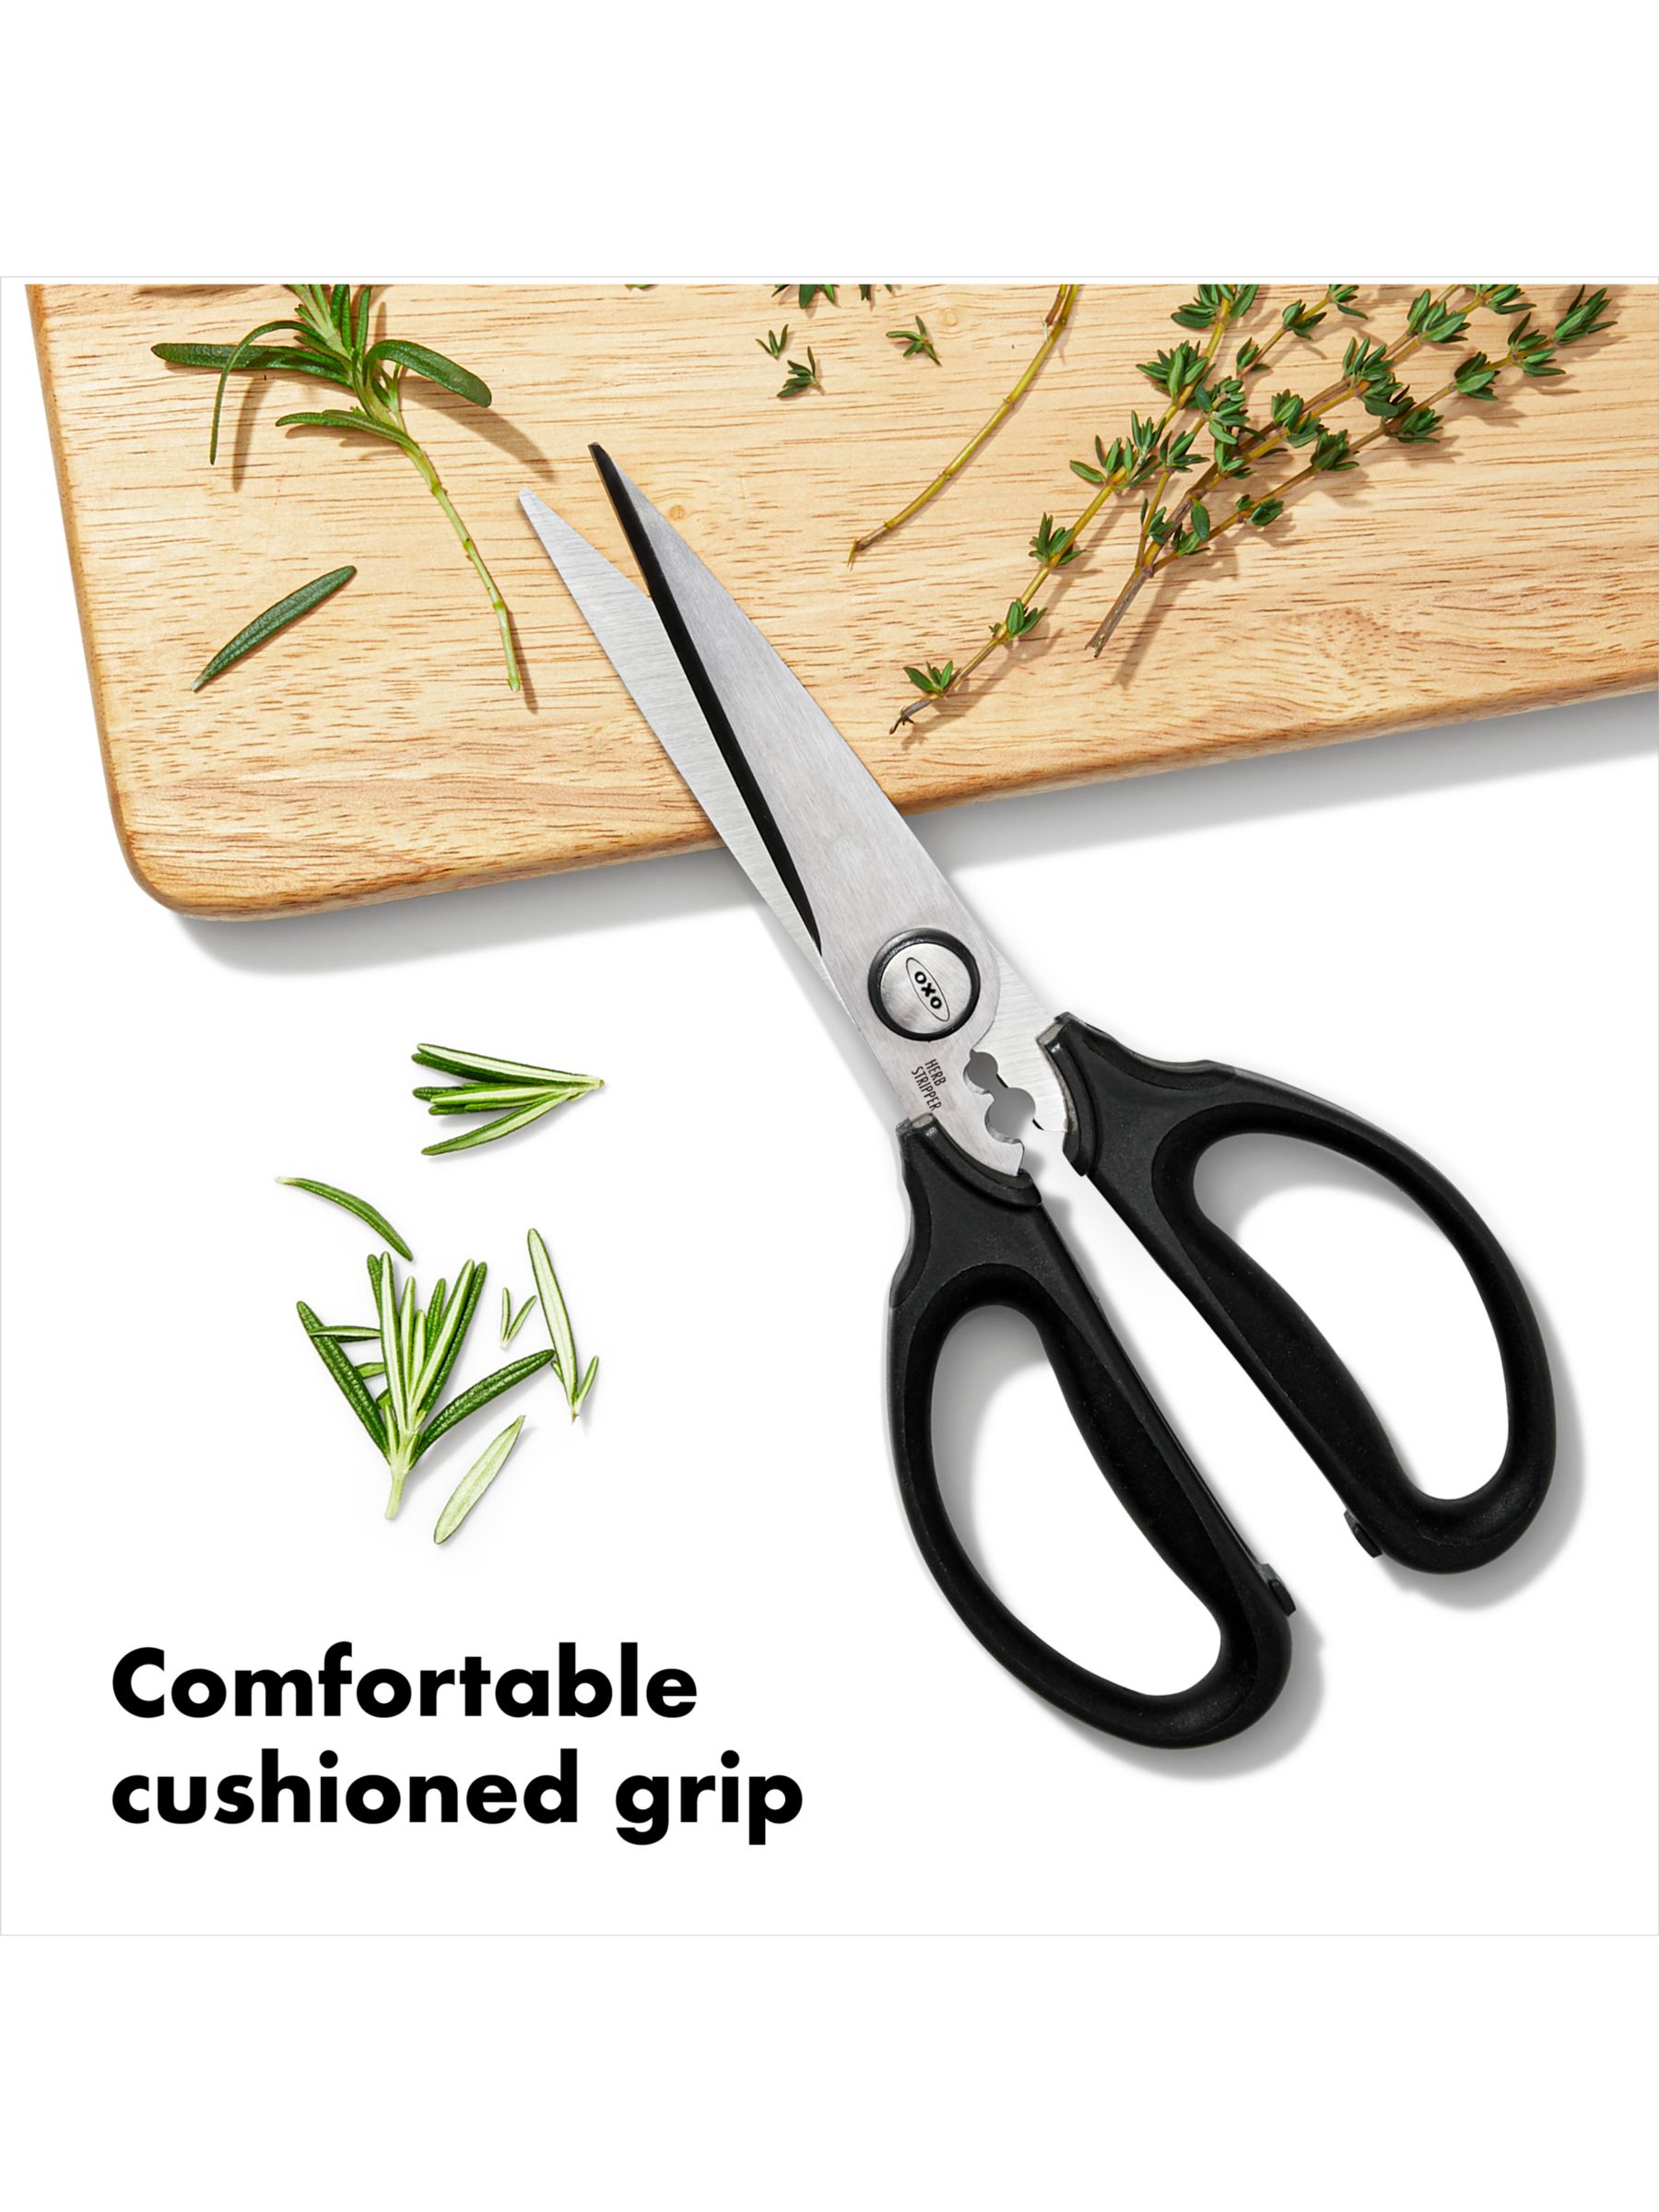 OXO Good Grips Kitchen & Herb Pull Apart Scissors Shears 719812019611